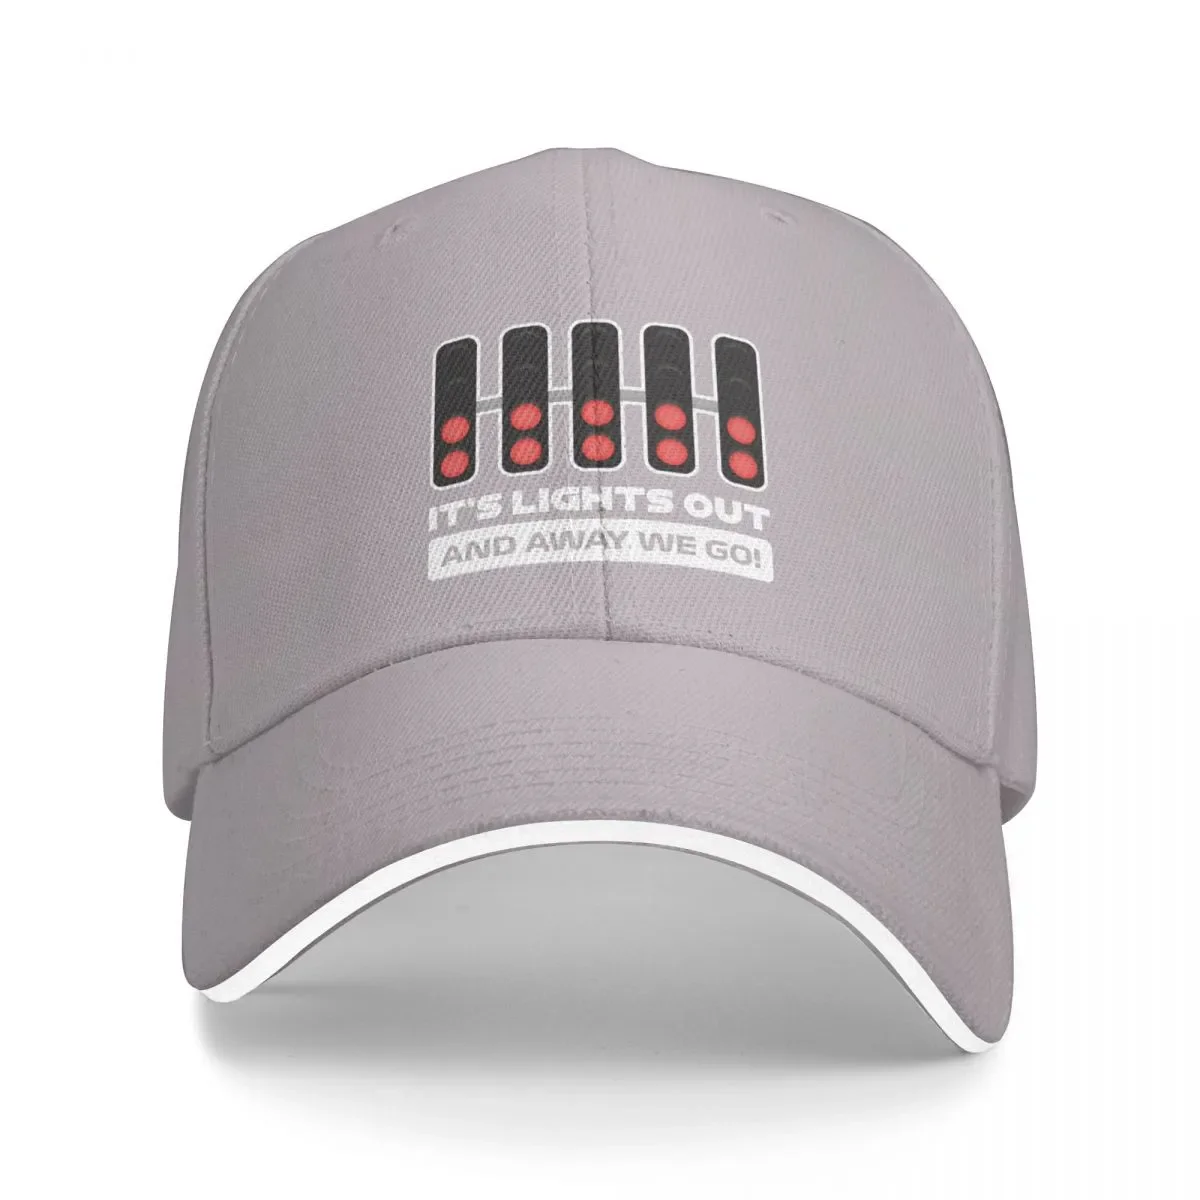 

New It's Lights Out and Away We Go! - Version 2 (Red BG) Cap Baseball Cap Sun cap bucket hat Sunscreen Hat ladies Men's